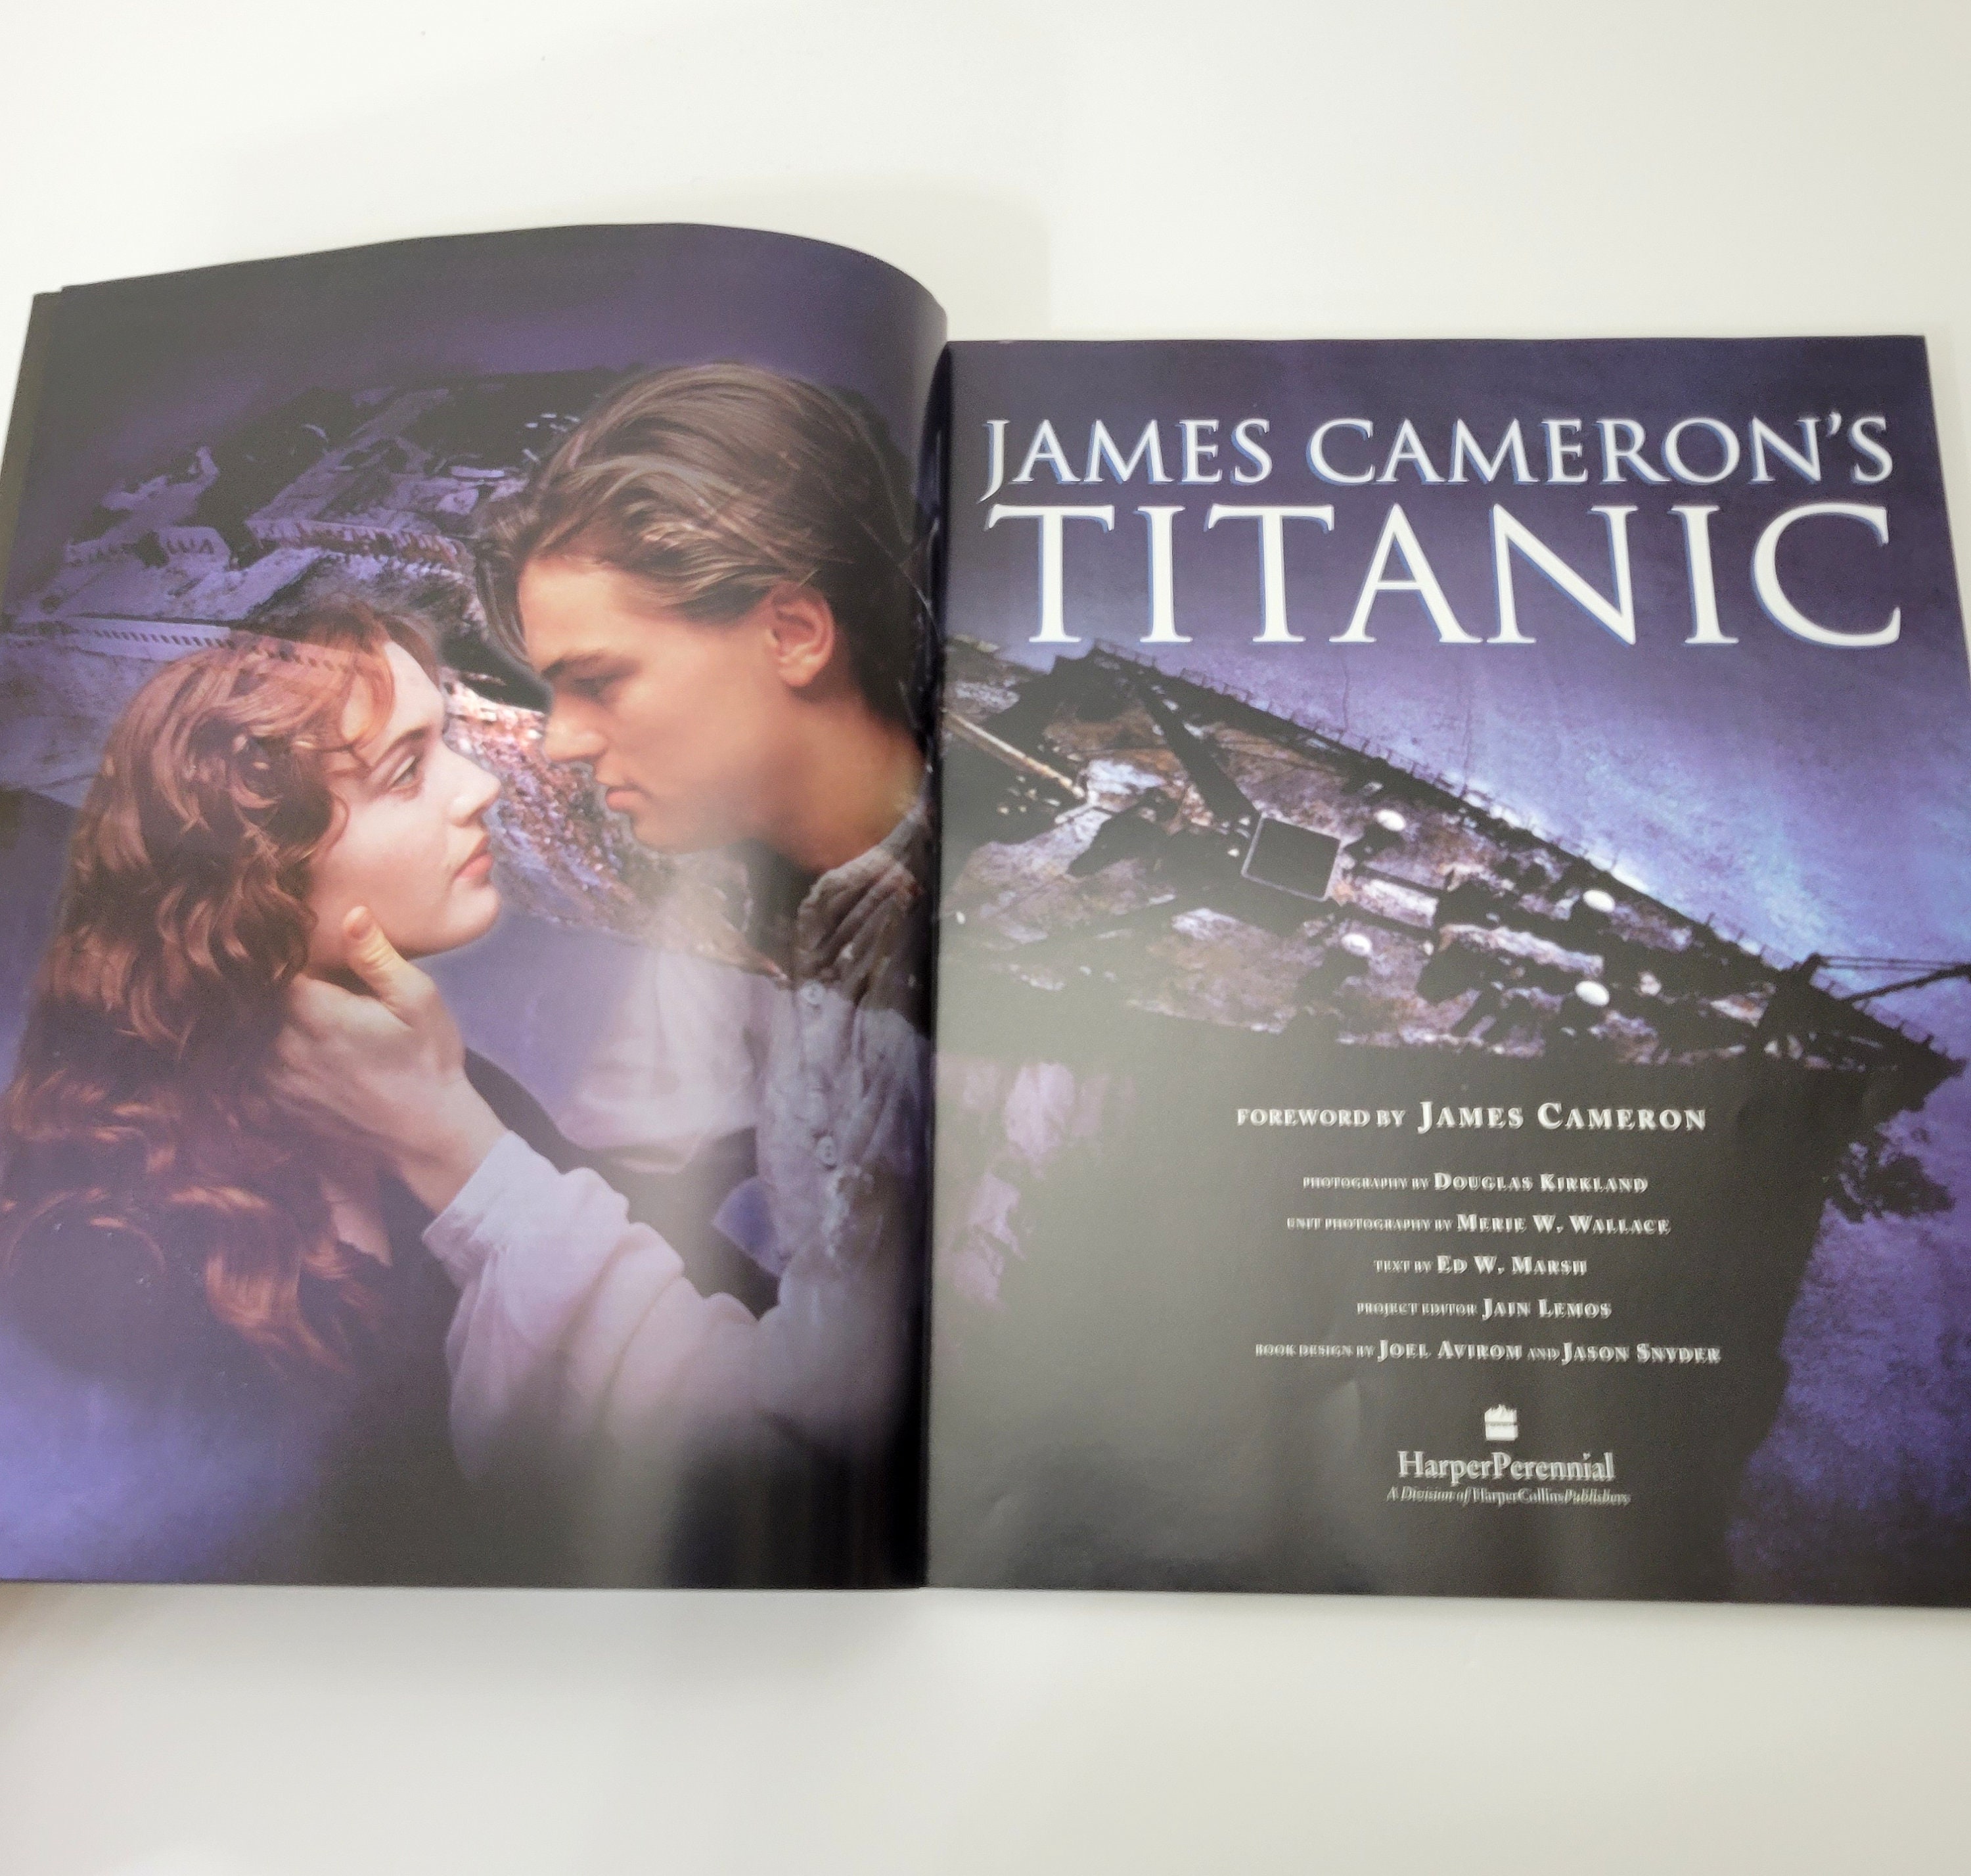 James Cameron's Titanic Text by Ed W. Marsh 1997 - Etsy Australia